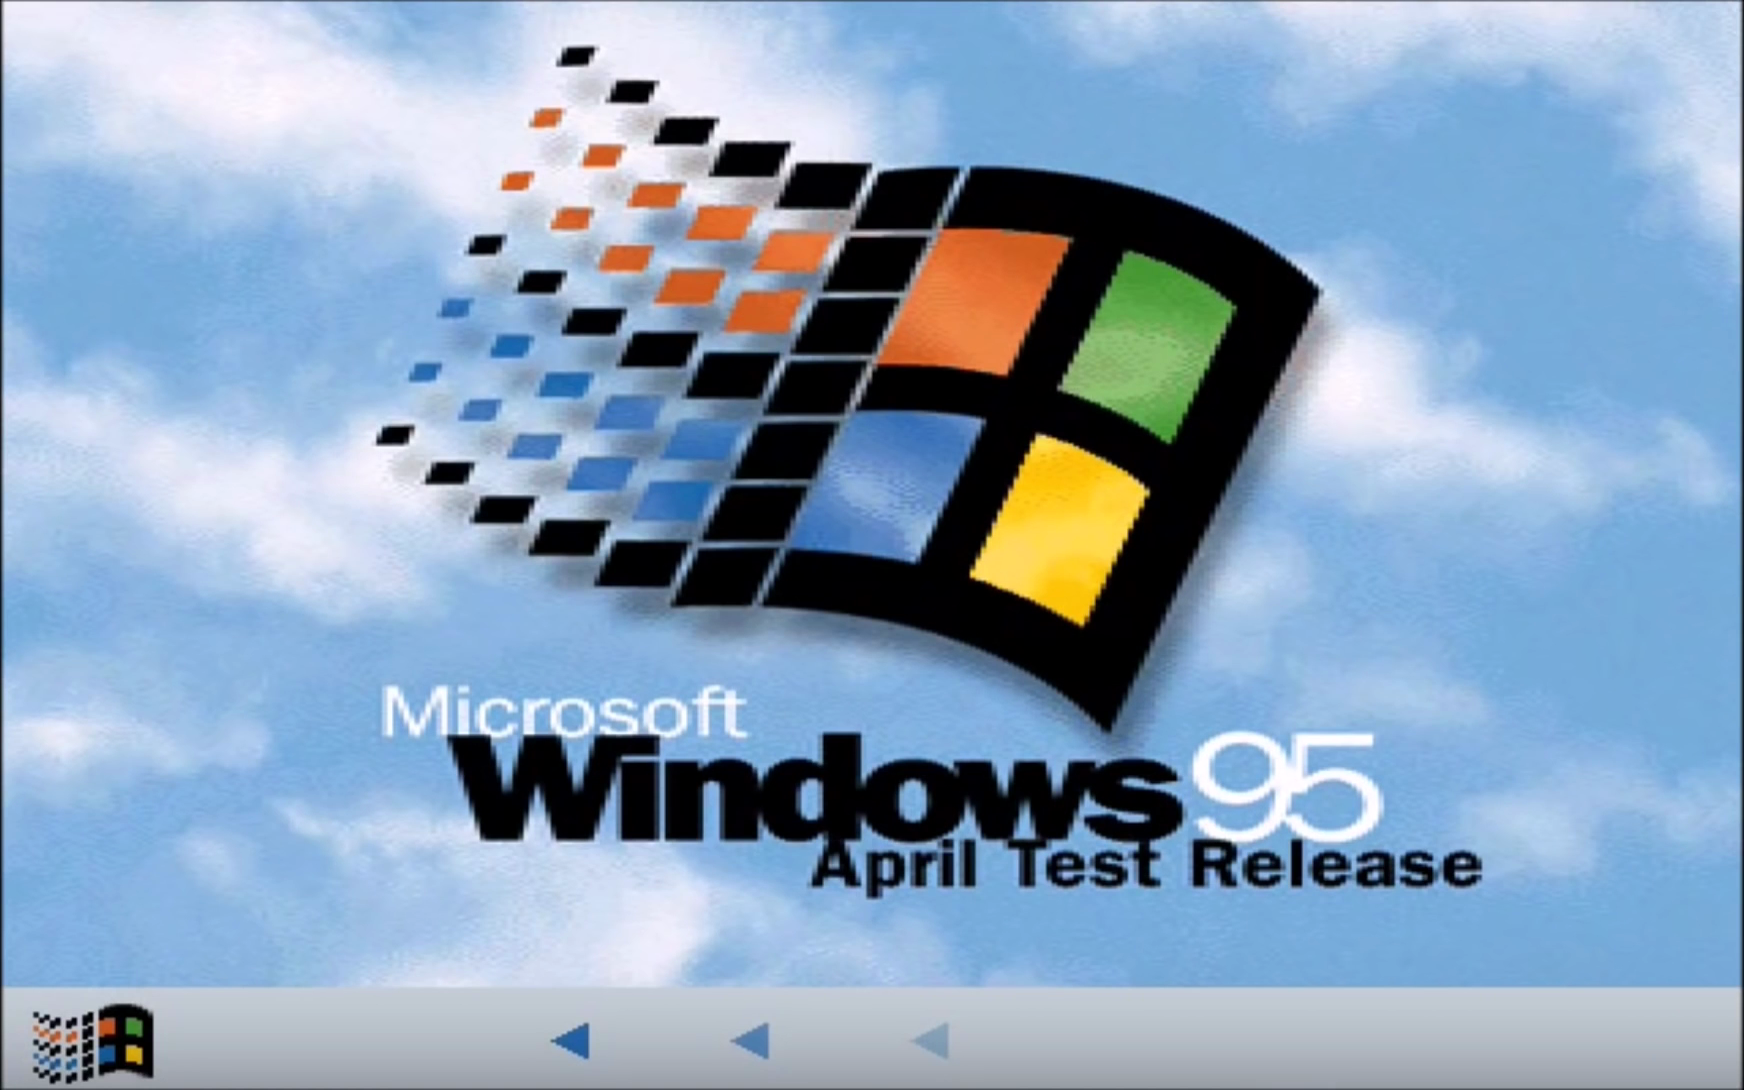 Windows 95 - April Test Release splash screen